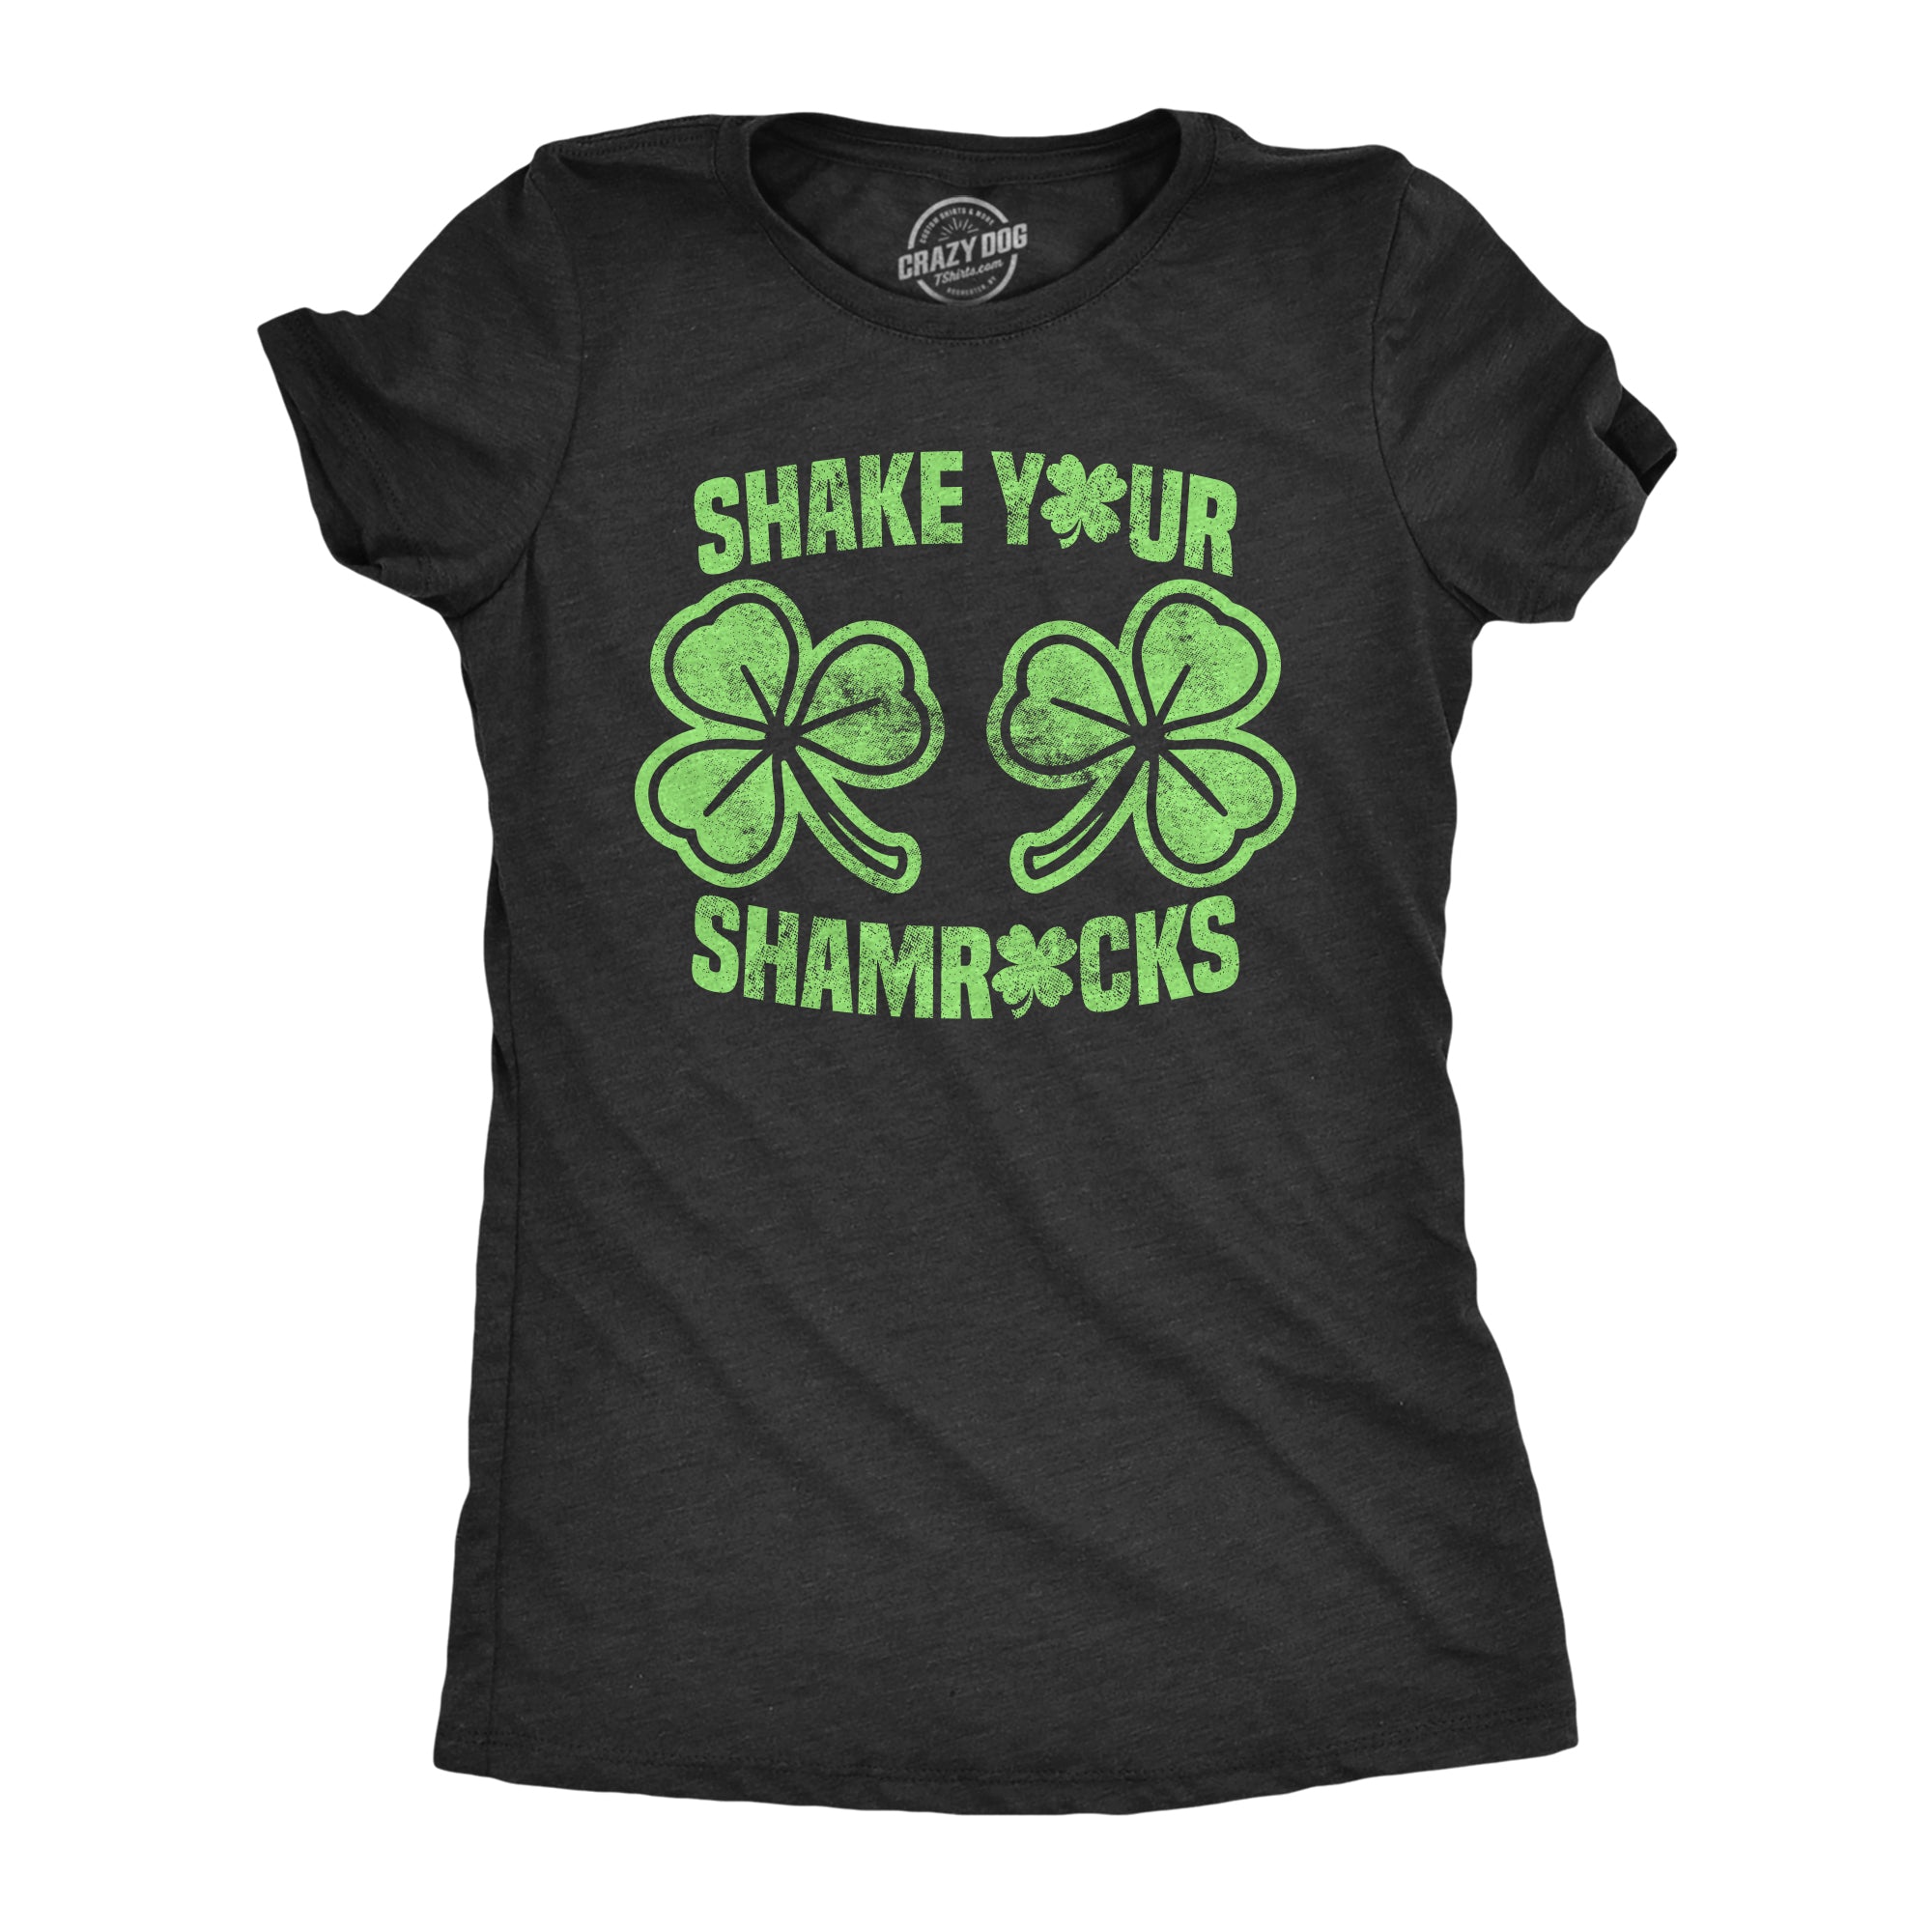 Funny Heather Black Shake Your Shamrocks Black Womens T Shirt Nerdy Saint Patrick's Day Drinking Sex Tee